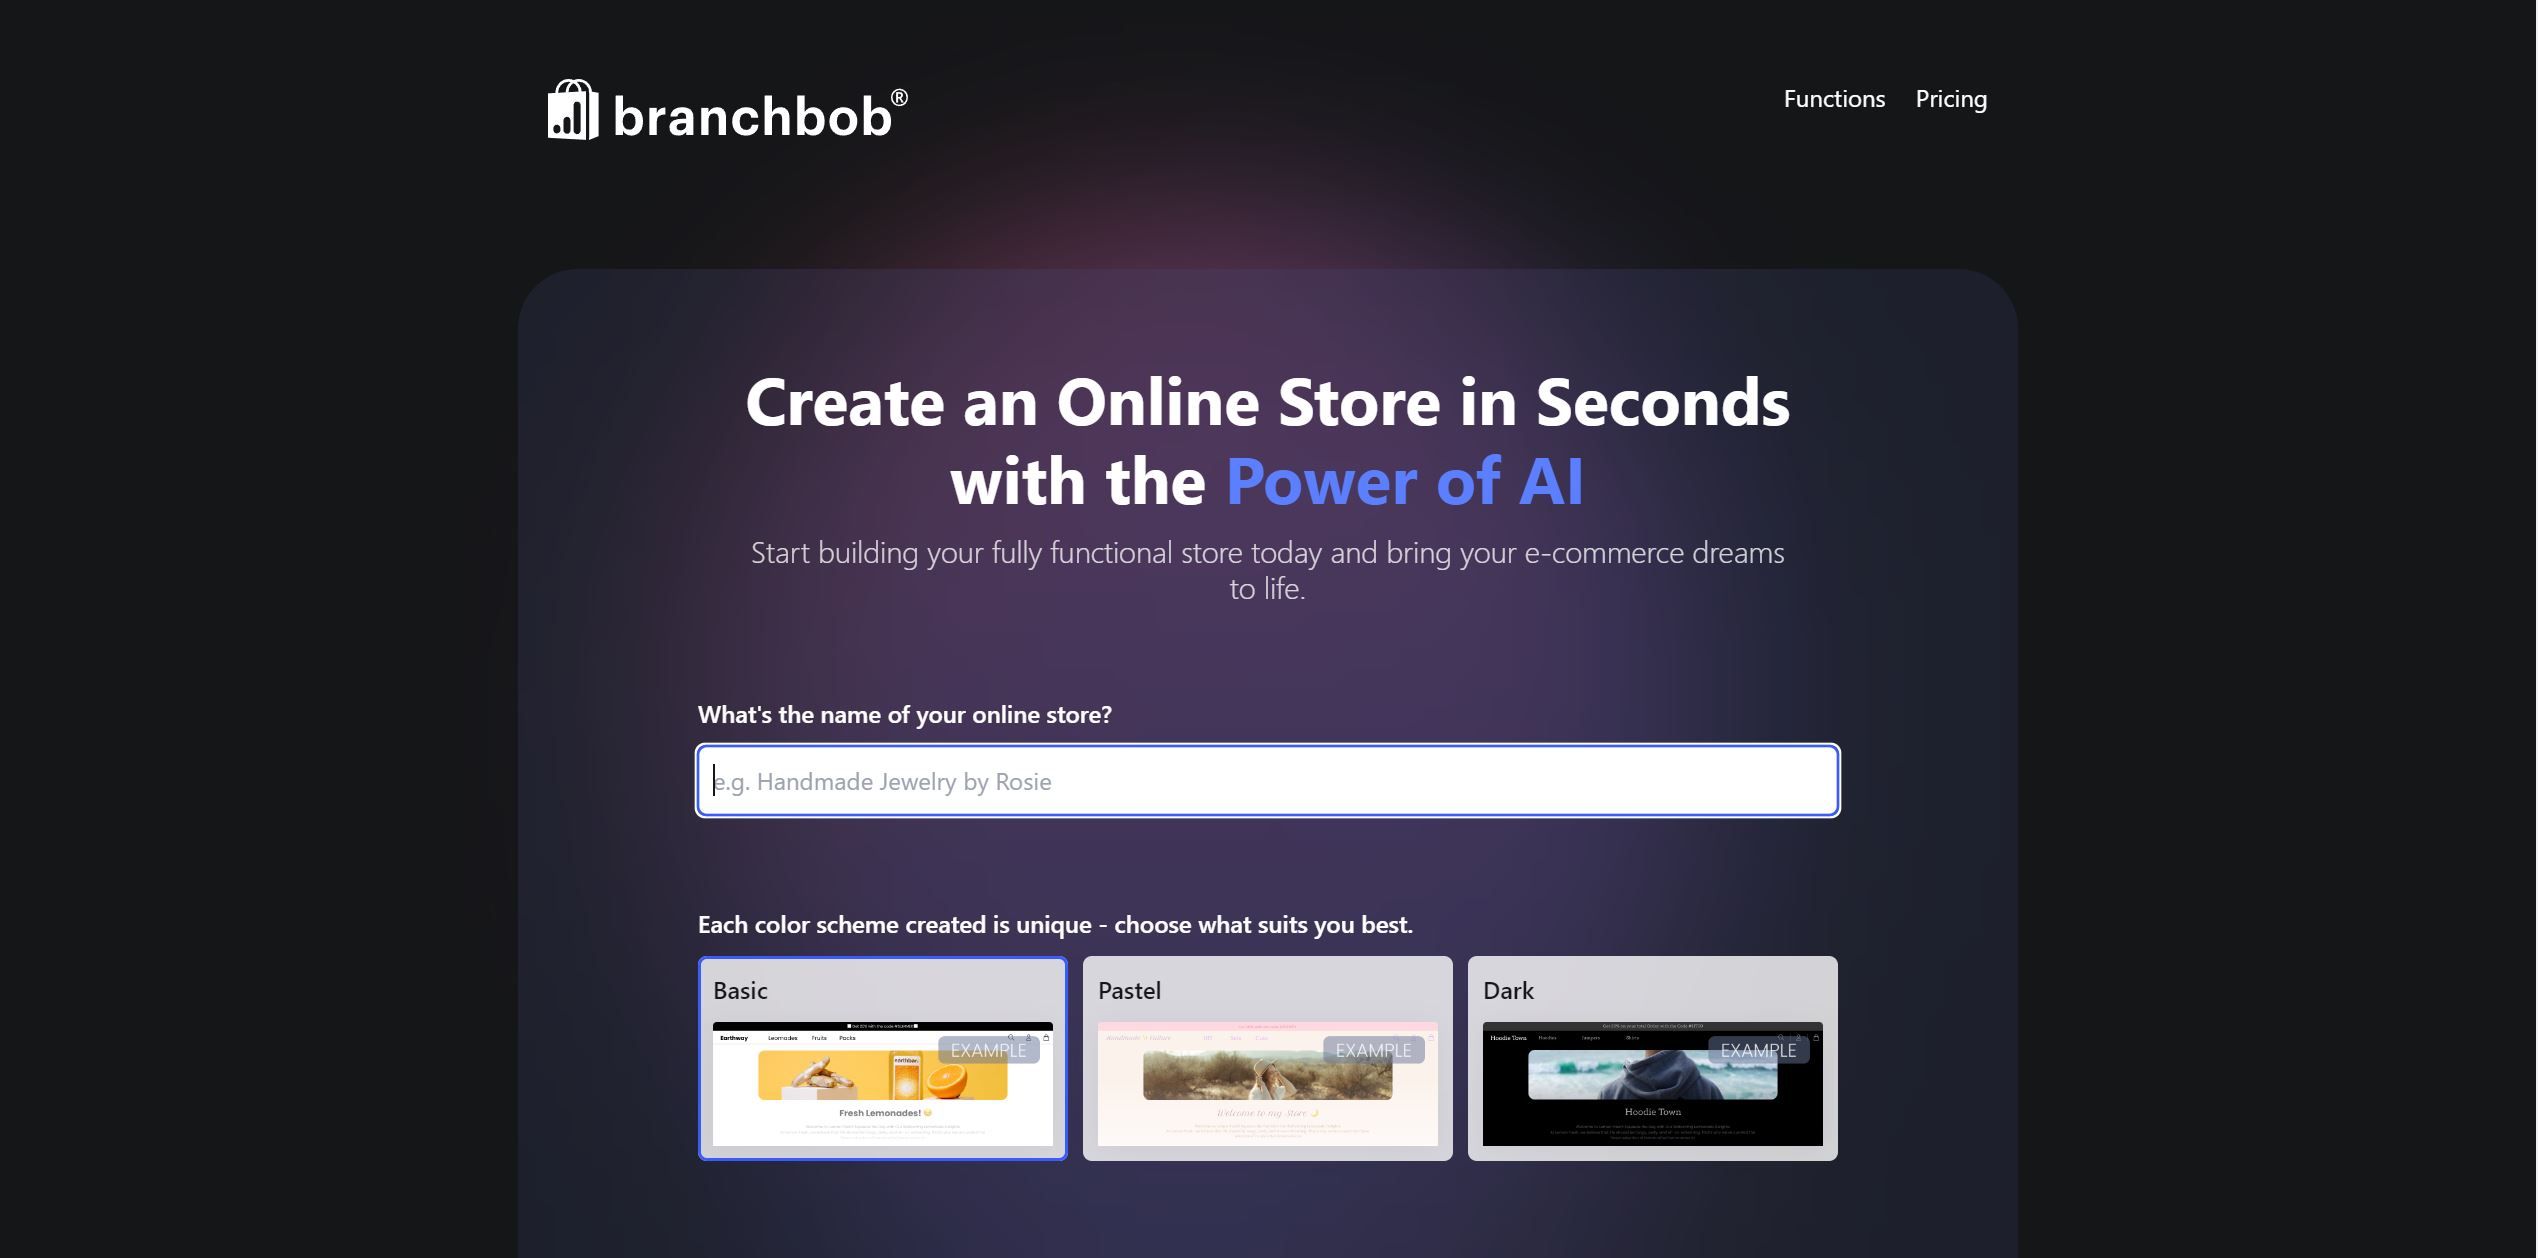  Branchbob.ai is an AI-powered platform that